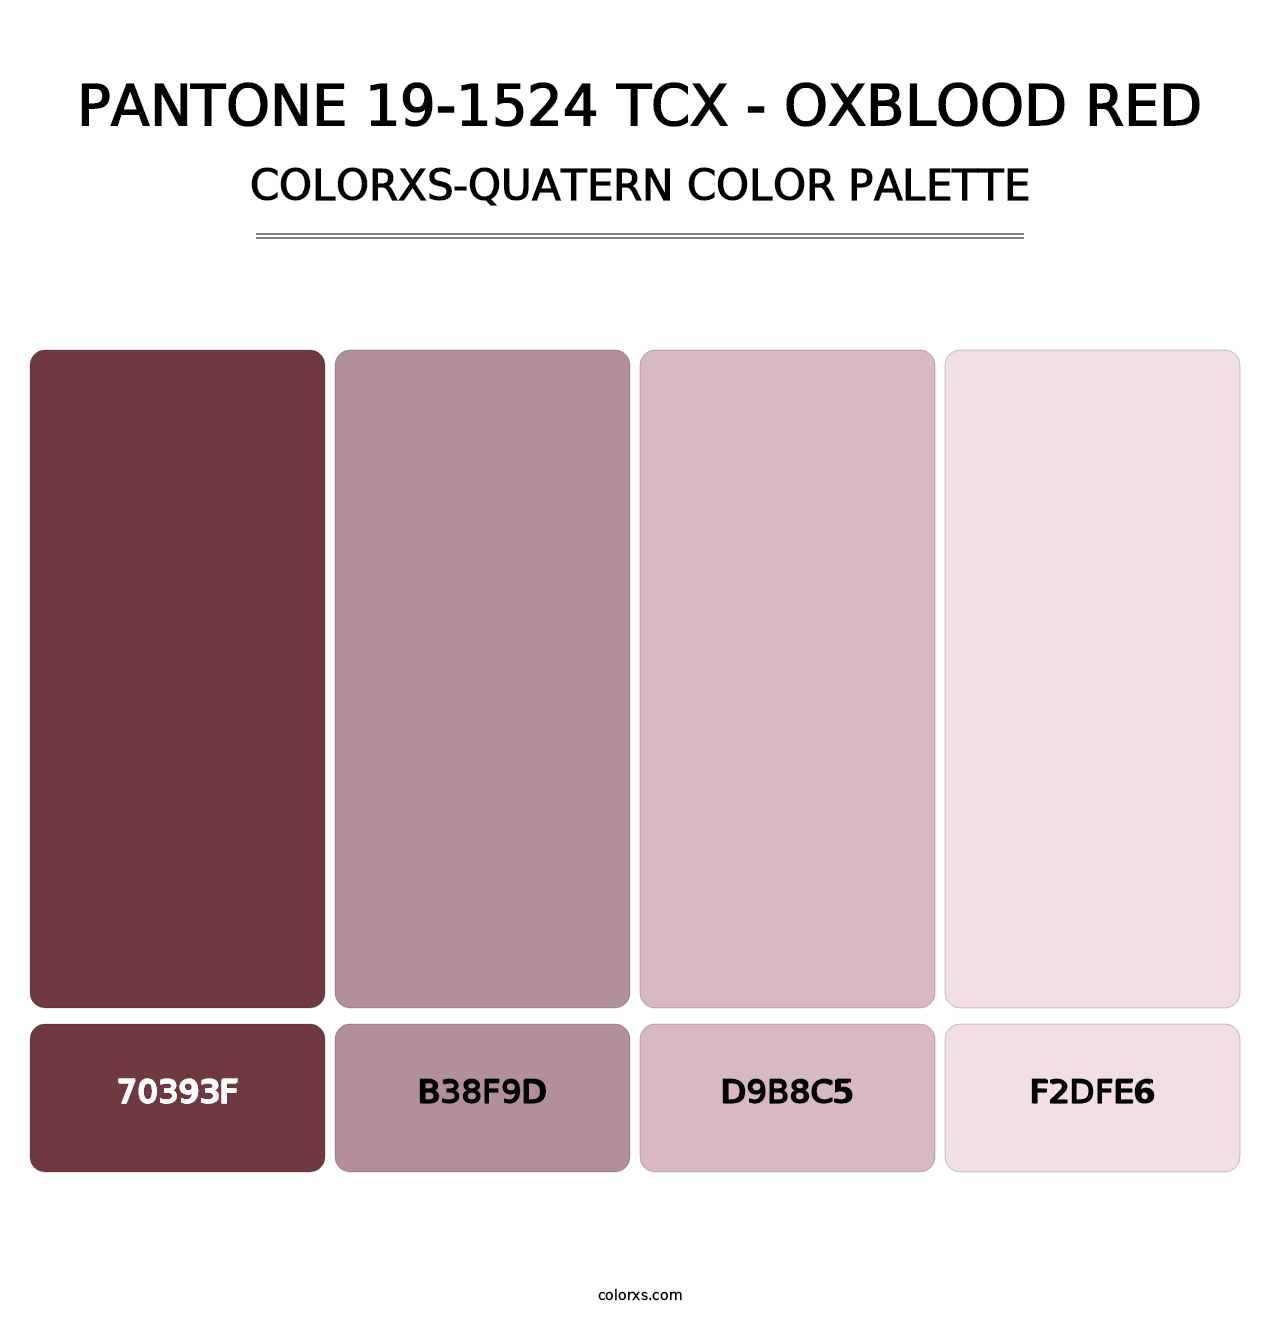 PANTONE 19-1524 TCX - Oxblood Red - Colorxs Quatern Palette